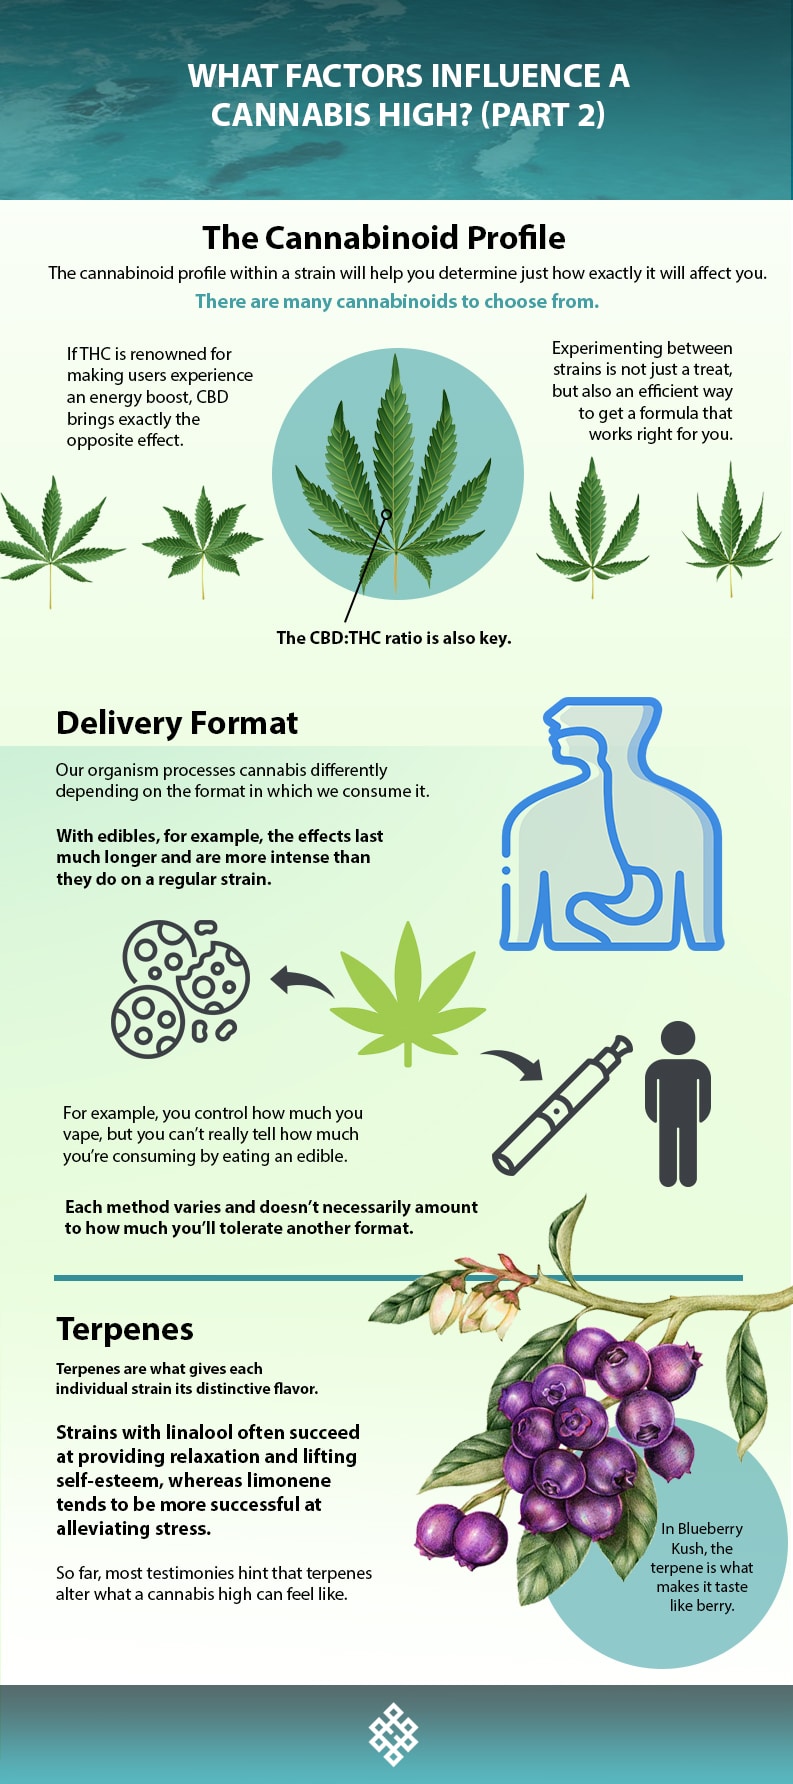 Factors, What Factors Influence A Cannabis High? (Part 2)